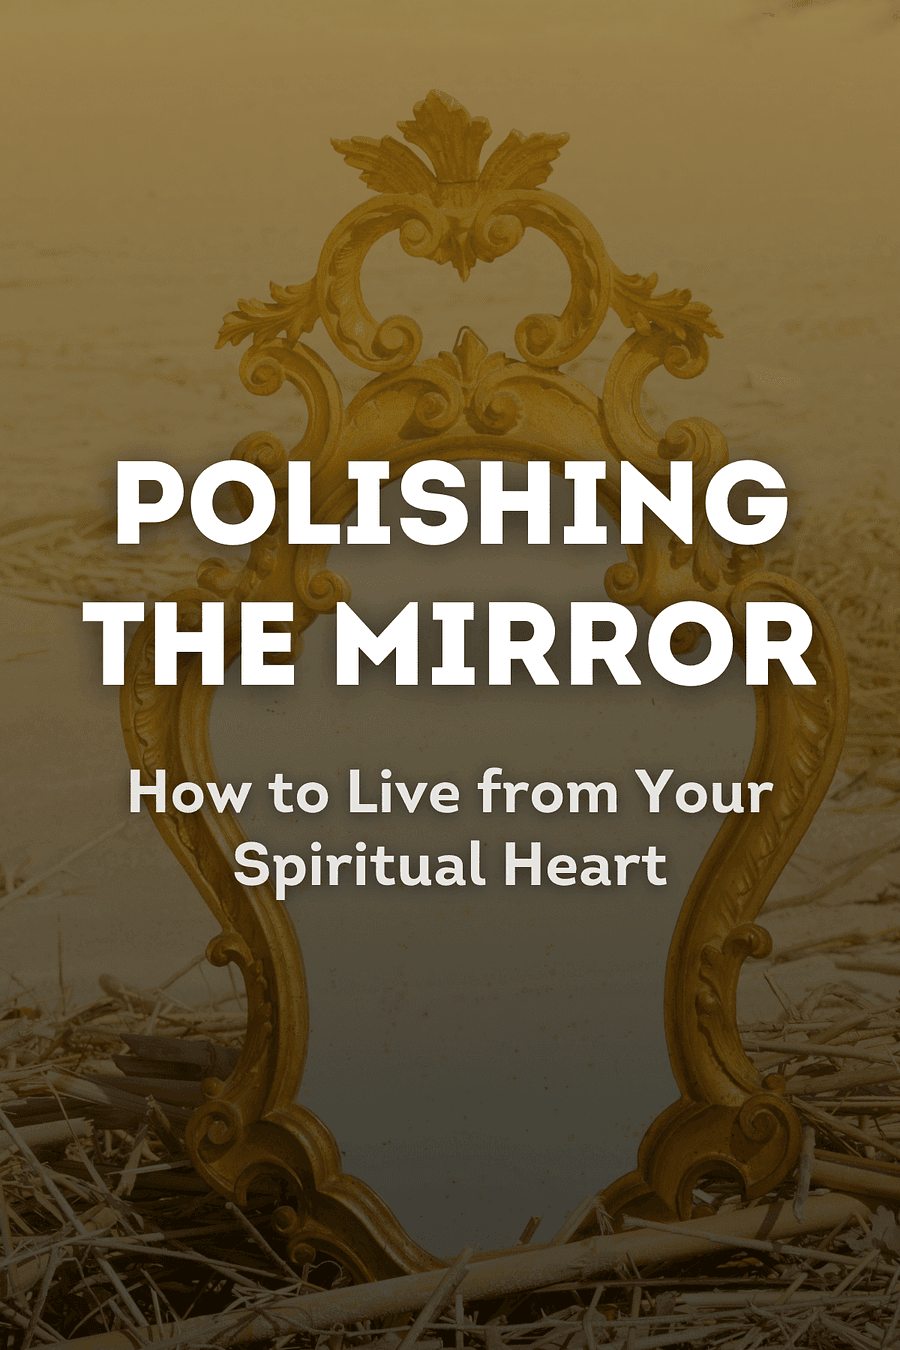 Polishing the Mirror by Ram Dass - Book Summary